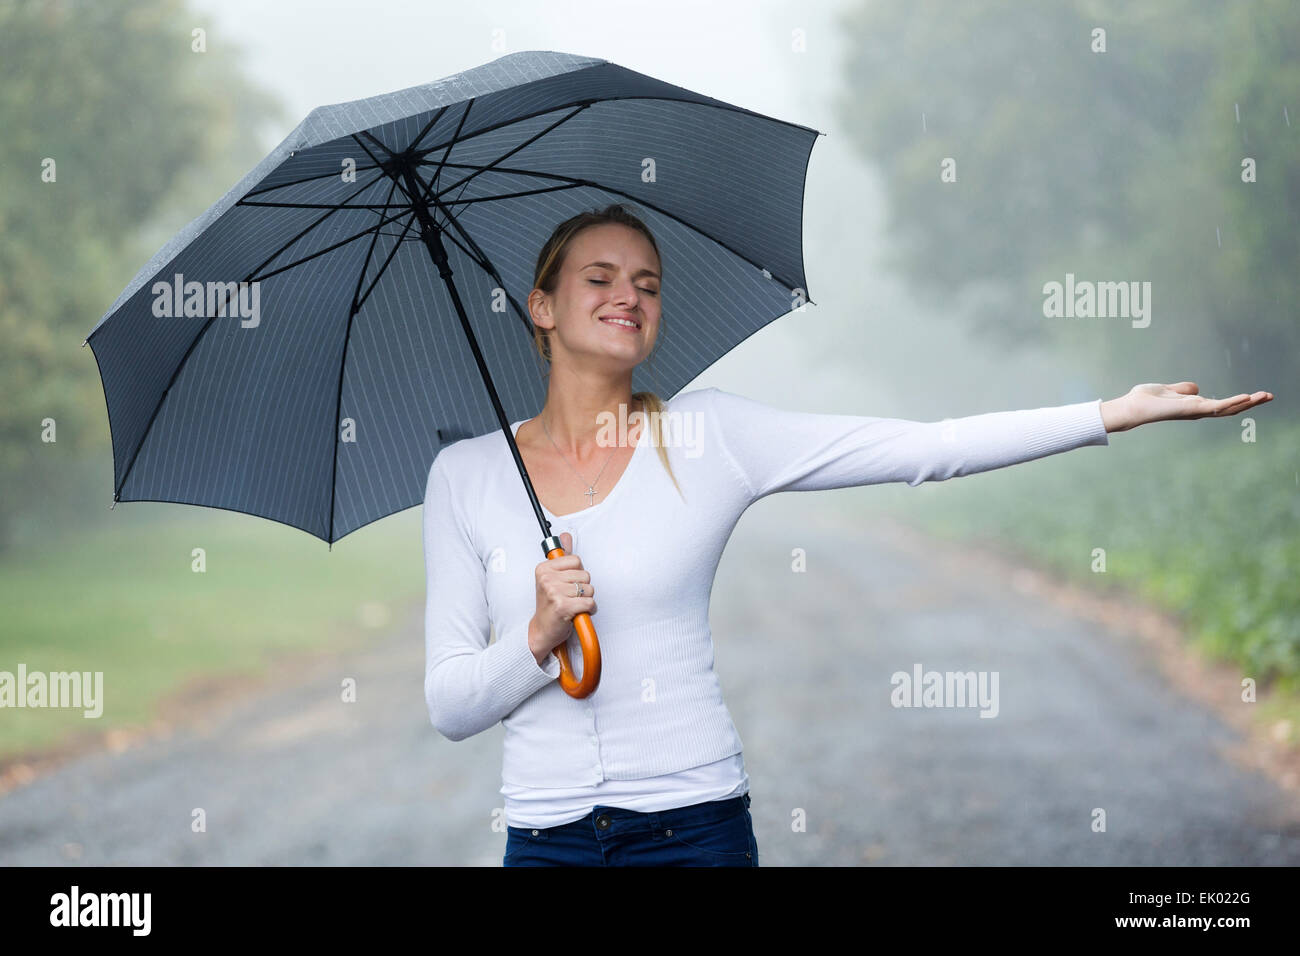 attractive woman with umbrella enjoying the rain Stock Photo